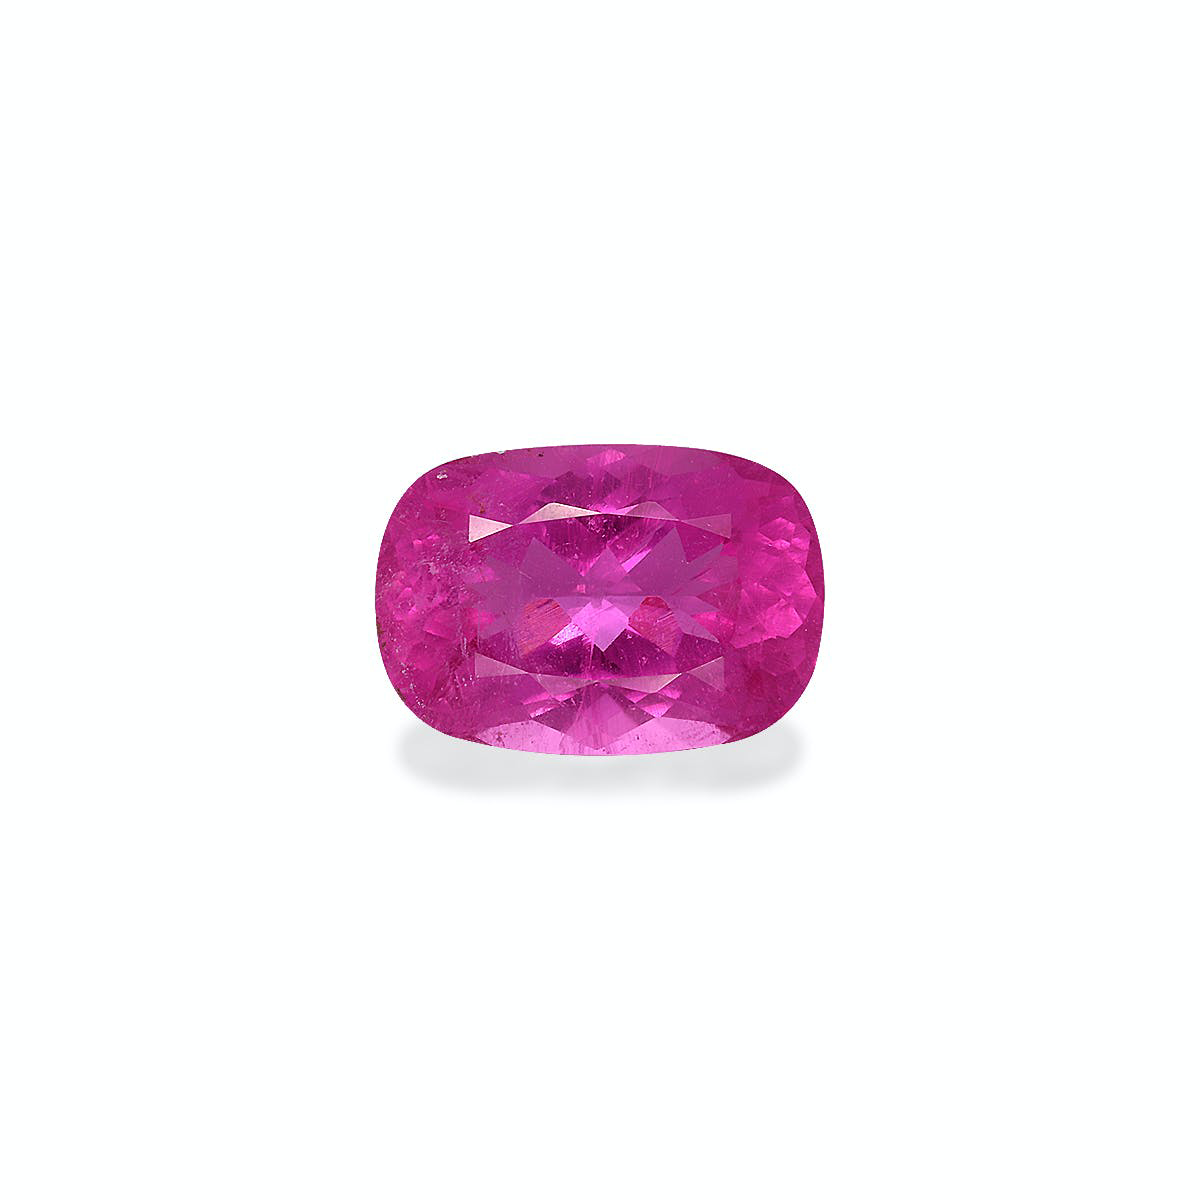 Picture of Vivid Pink Rubellite Tourmaline 3.87ct (RL0853)